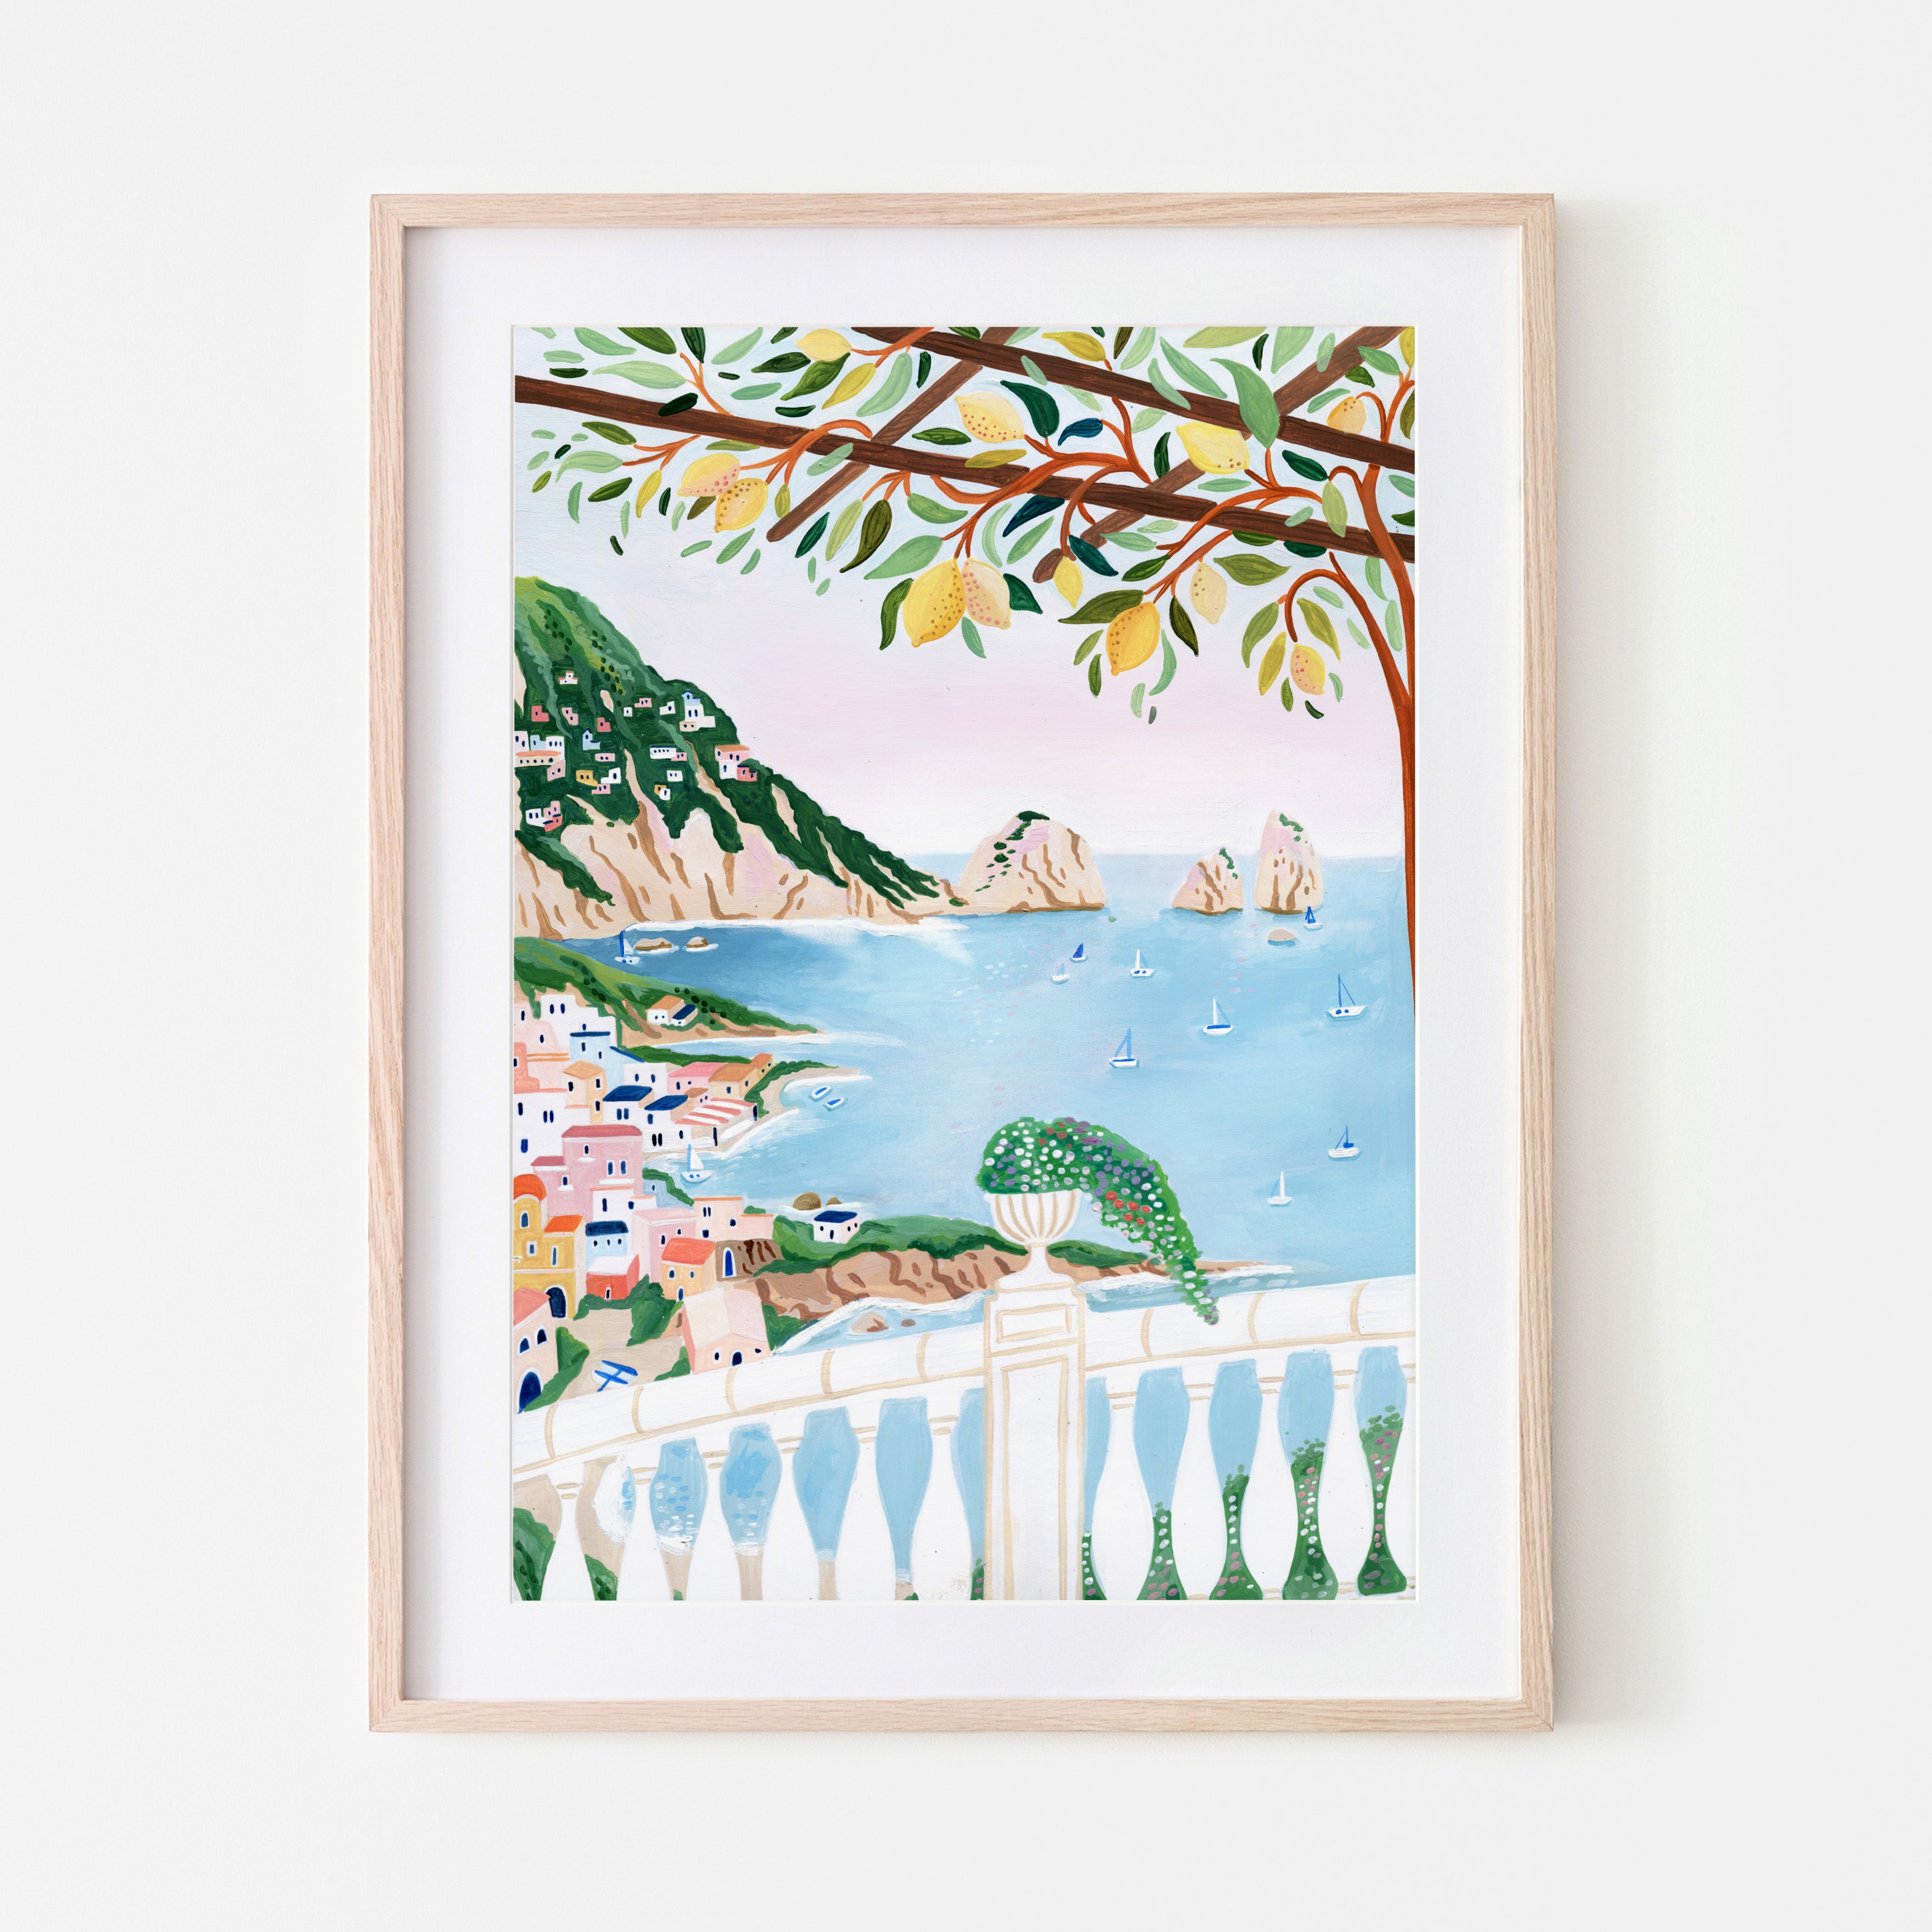 Capri Italy Art Print by TheRiverPrints